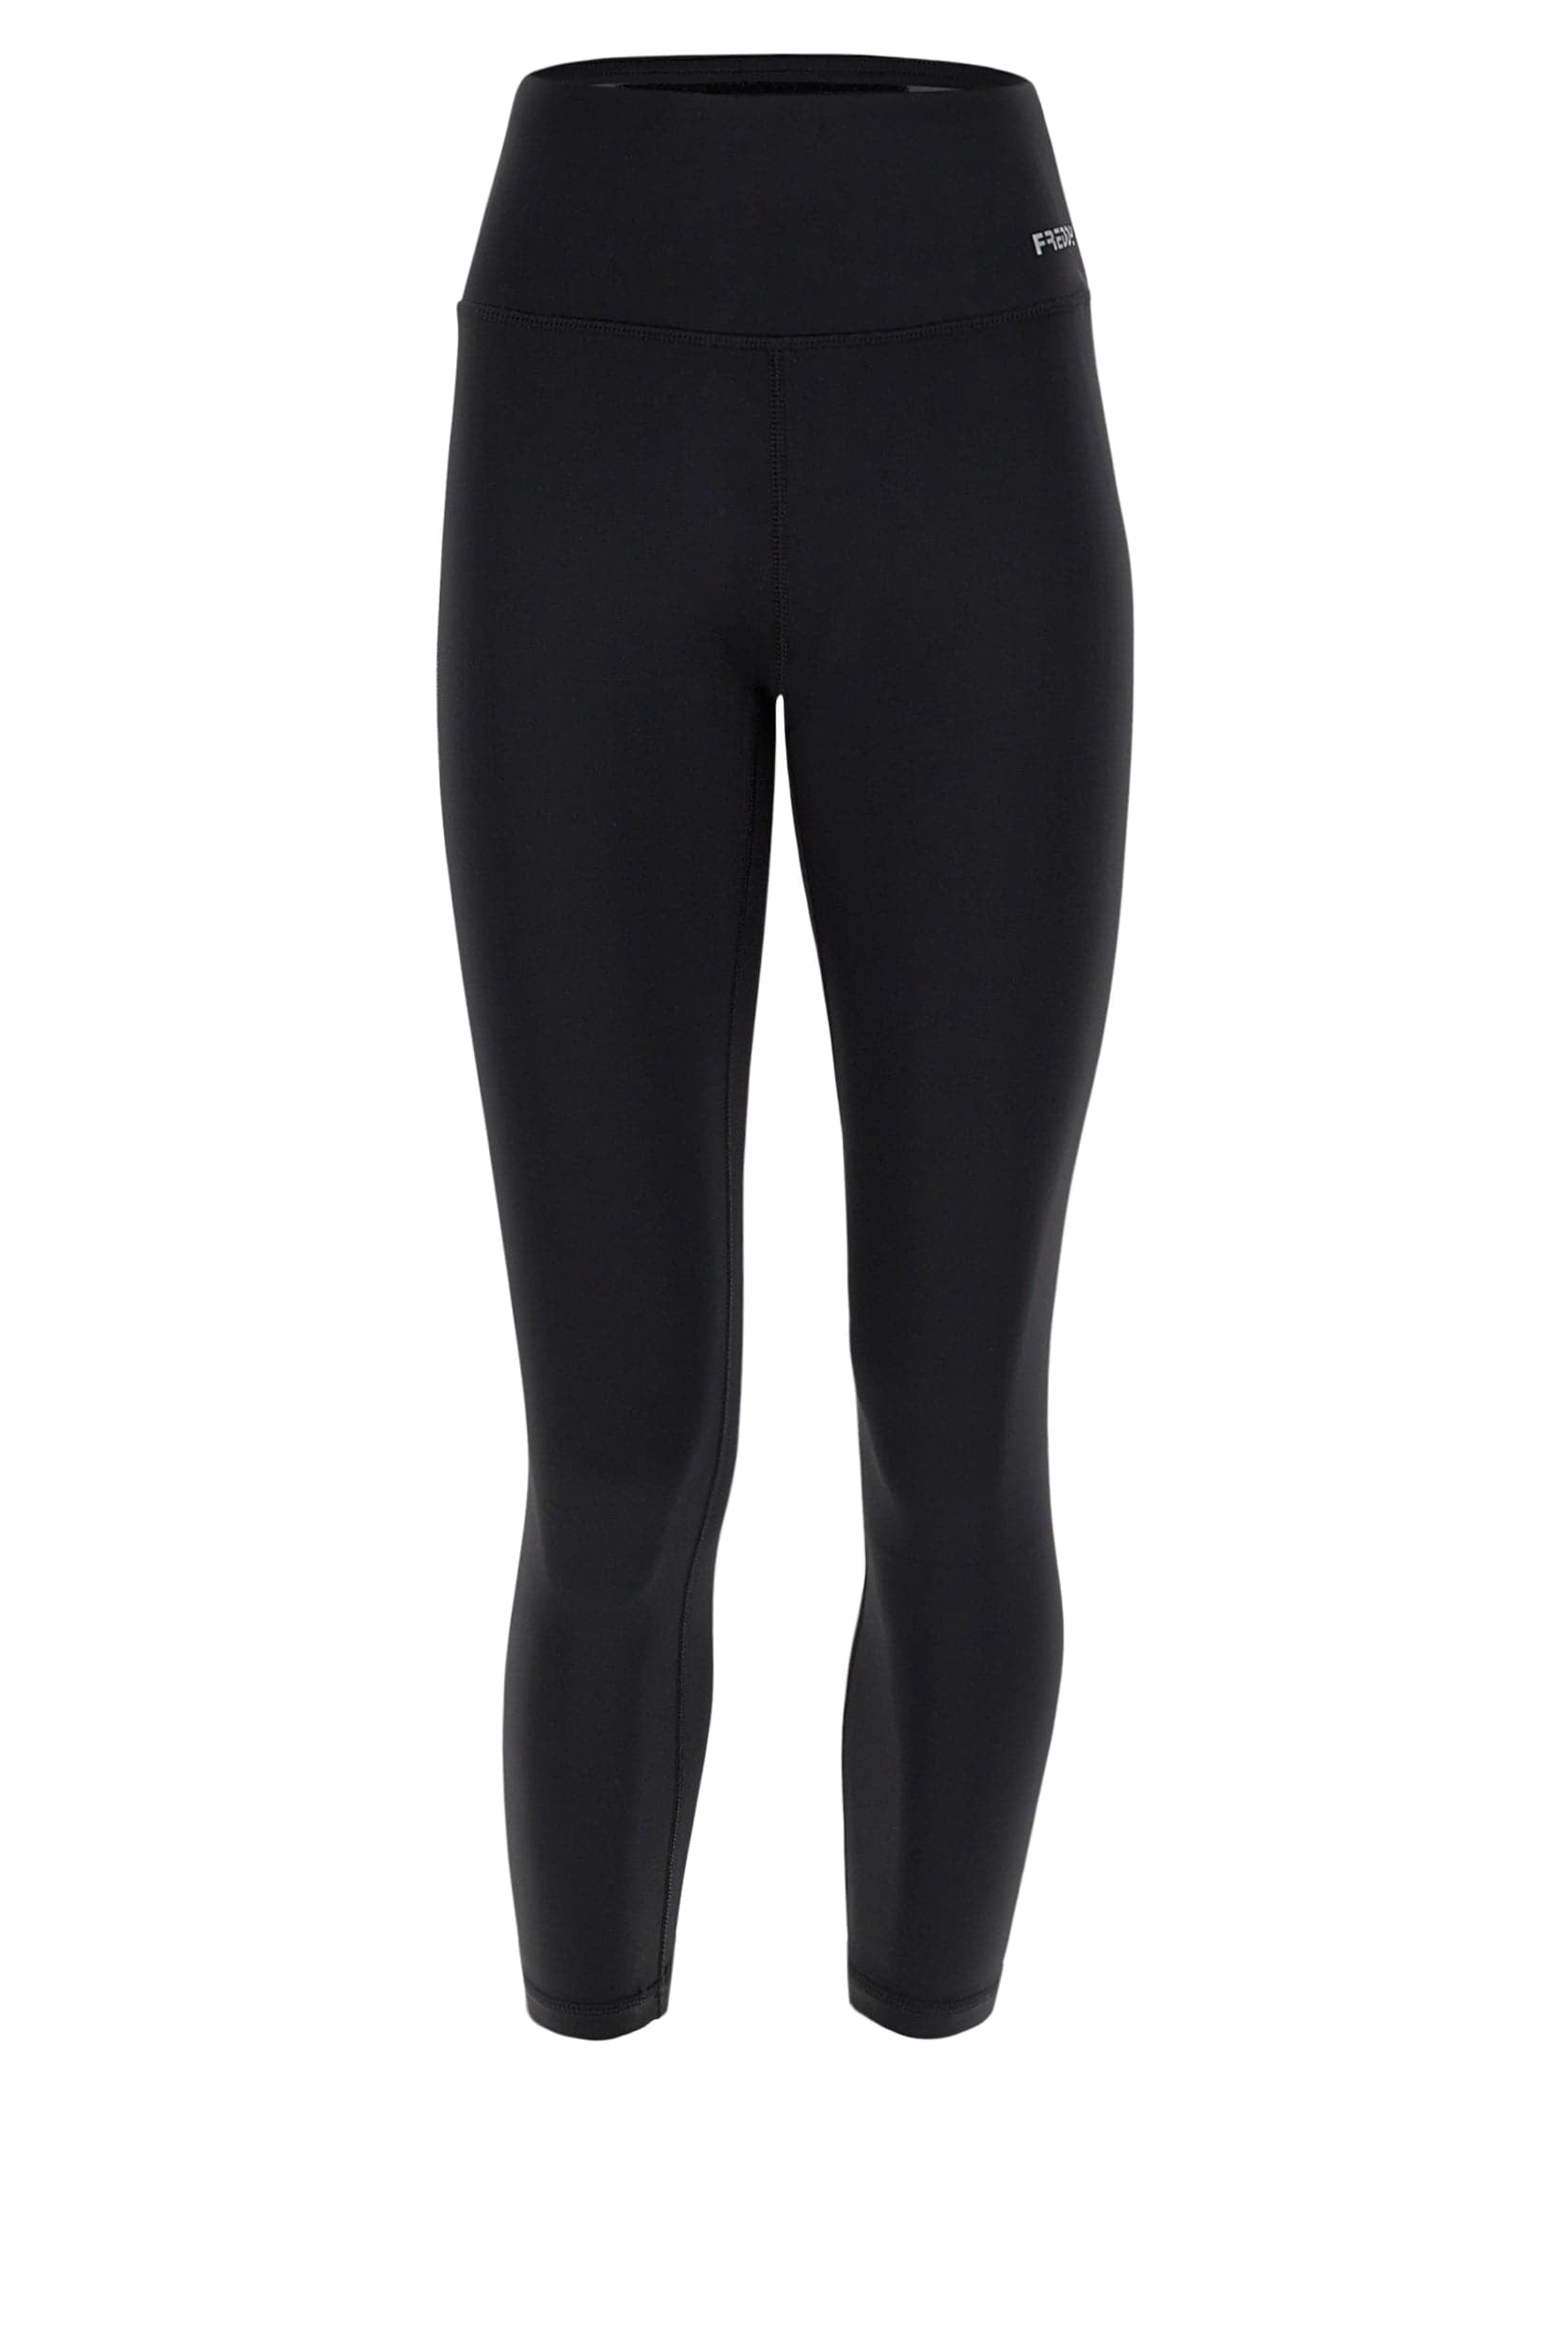 Superfit Premium Energy Pants® - High Waisted - 7/8 Length - Black 10